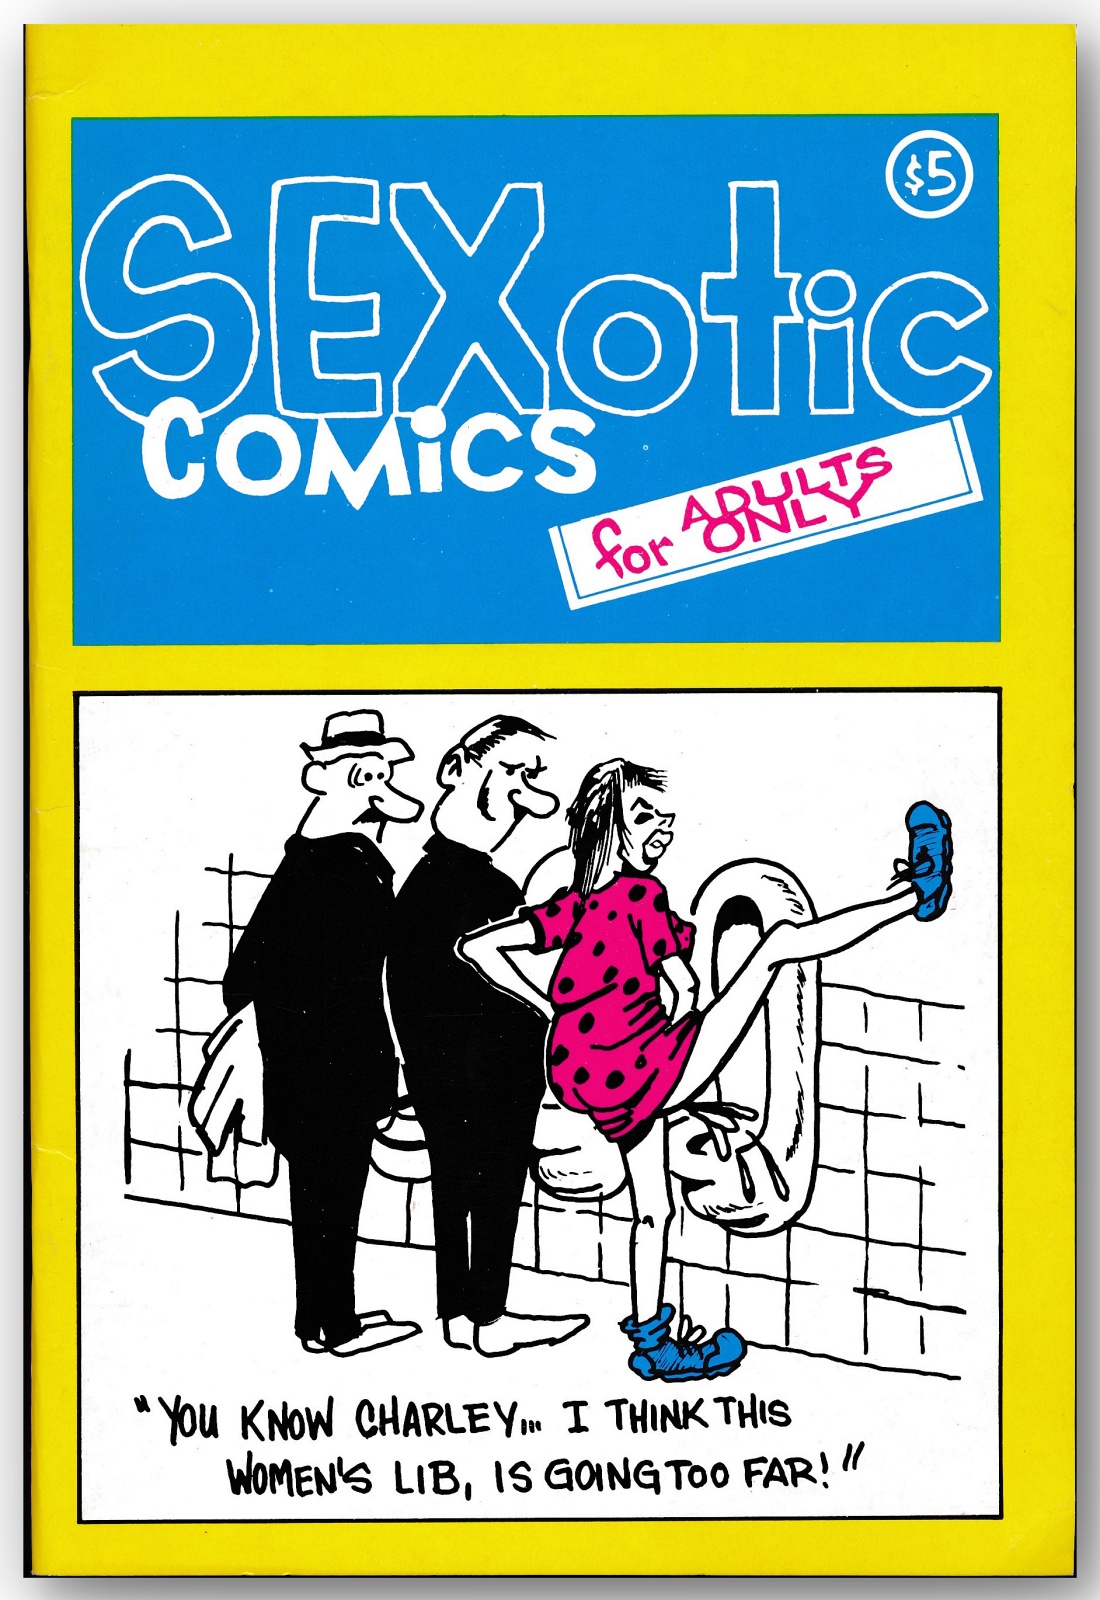 Sexotic comic